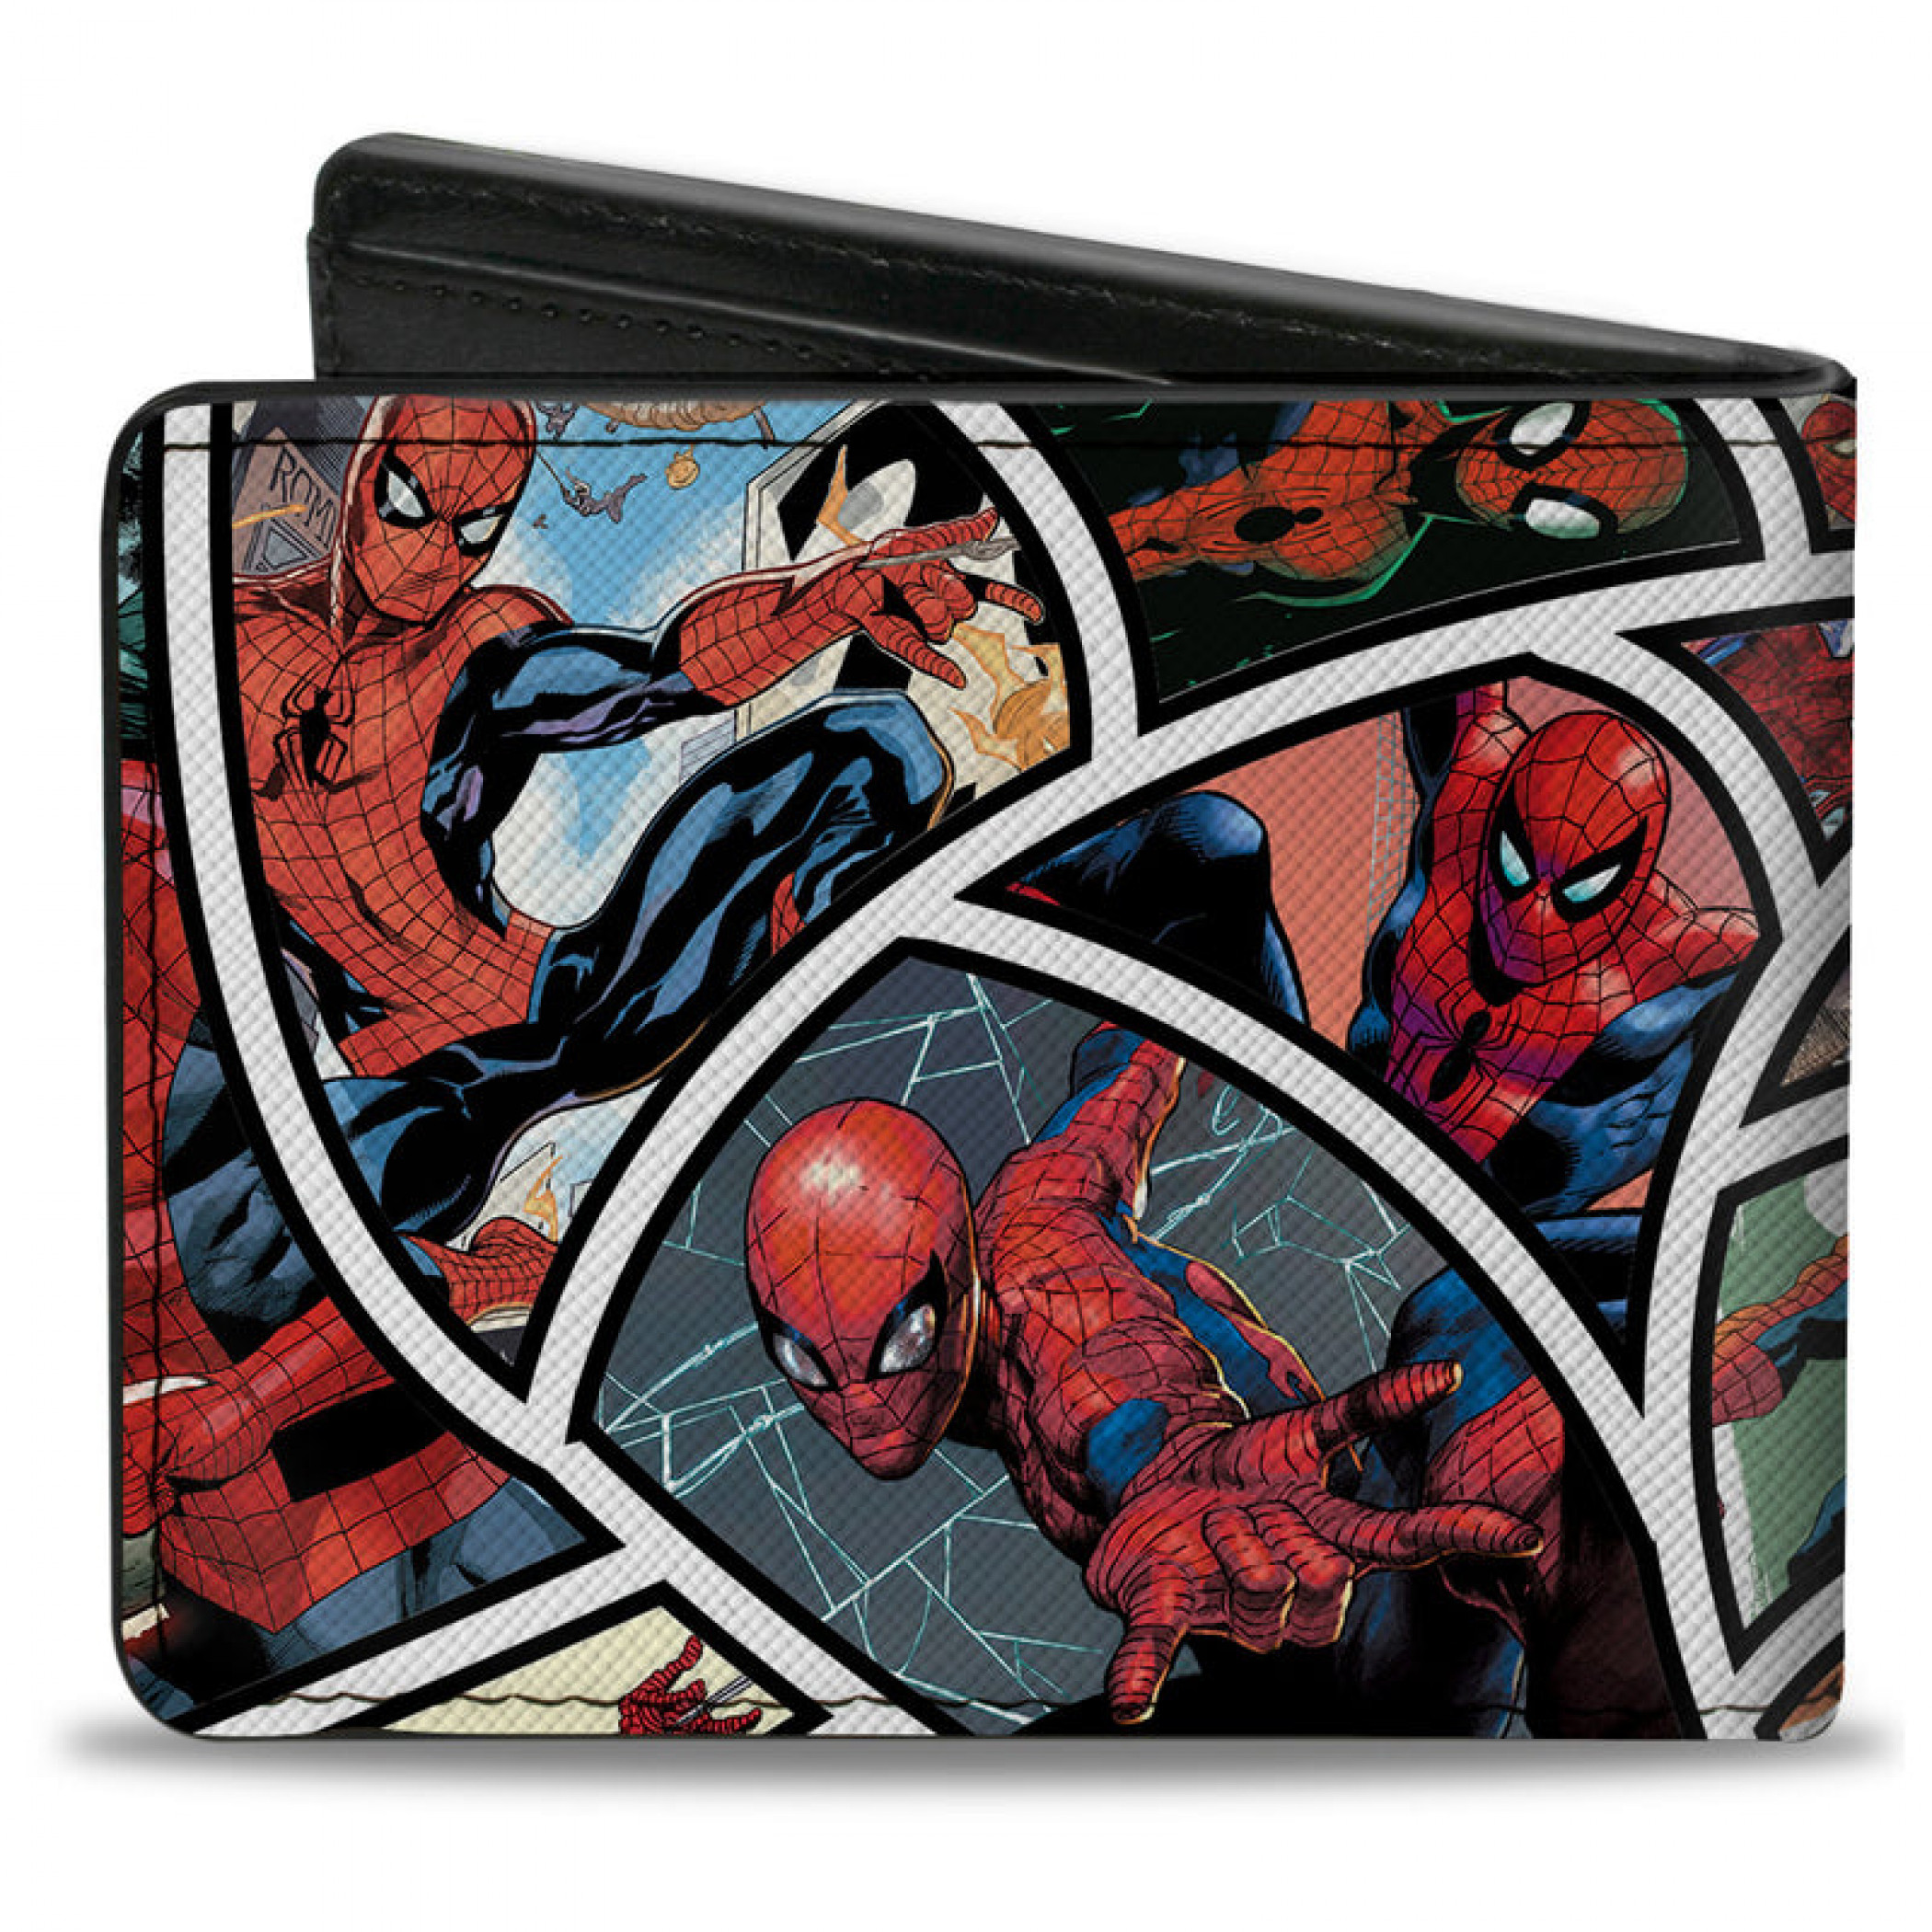 Spider-Man Beyond Amazing Spider Web Panels Bi-Fold Wallet